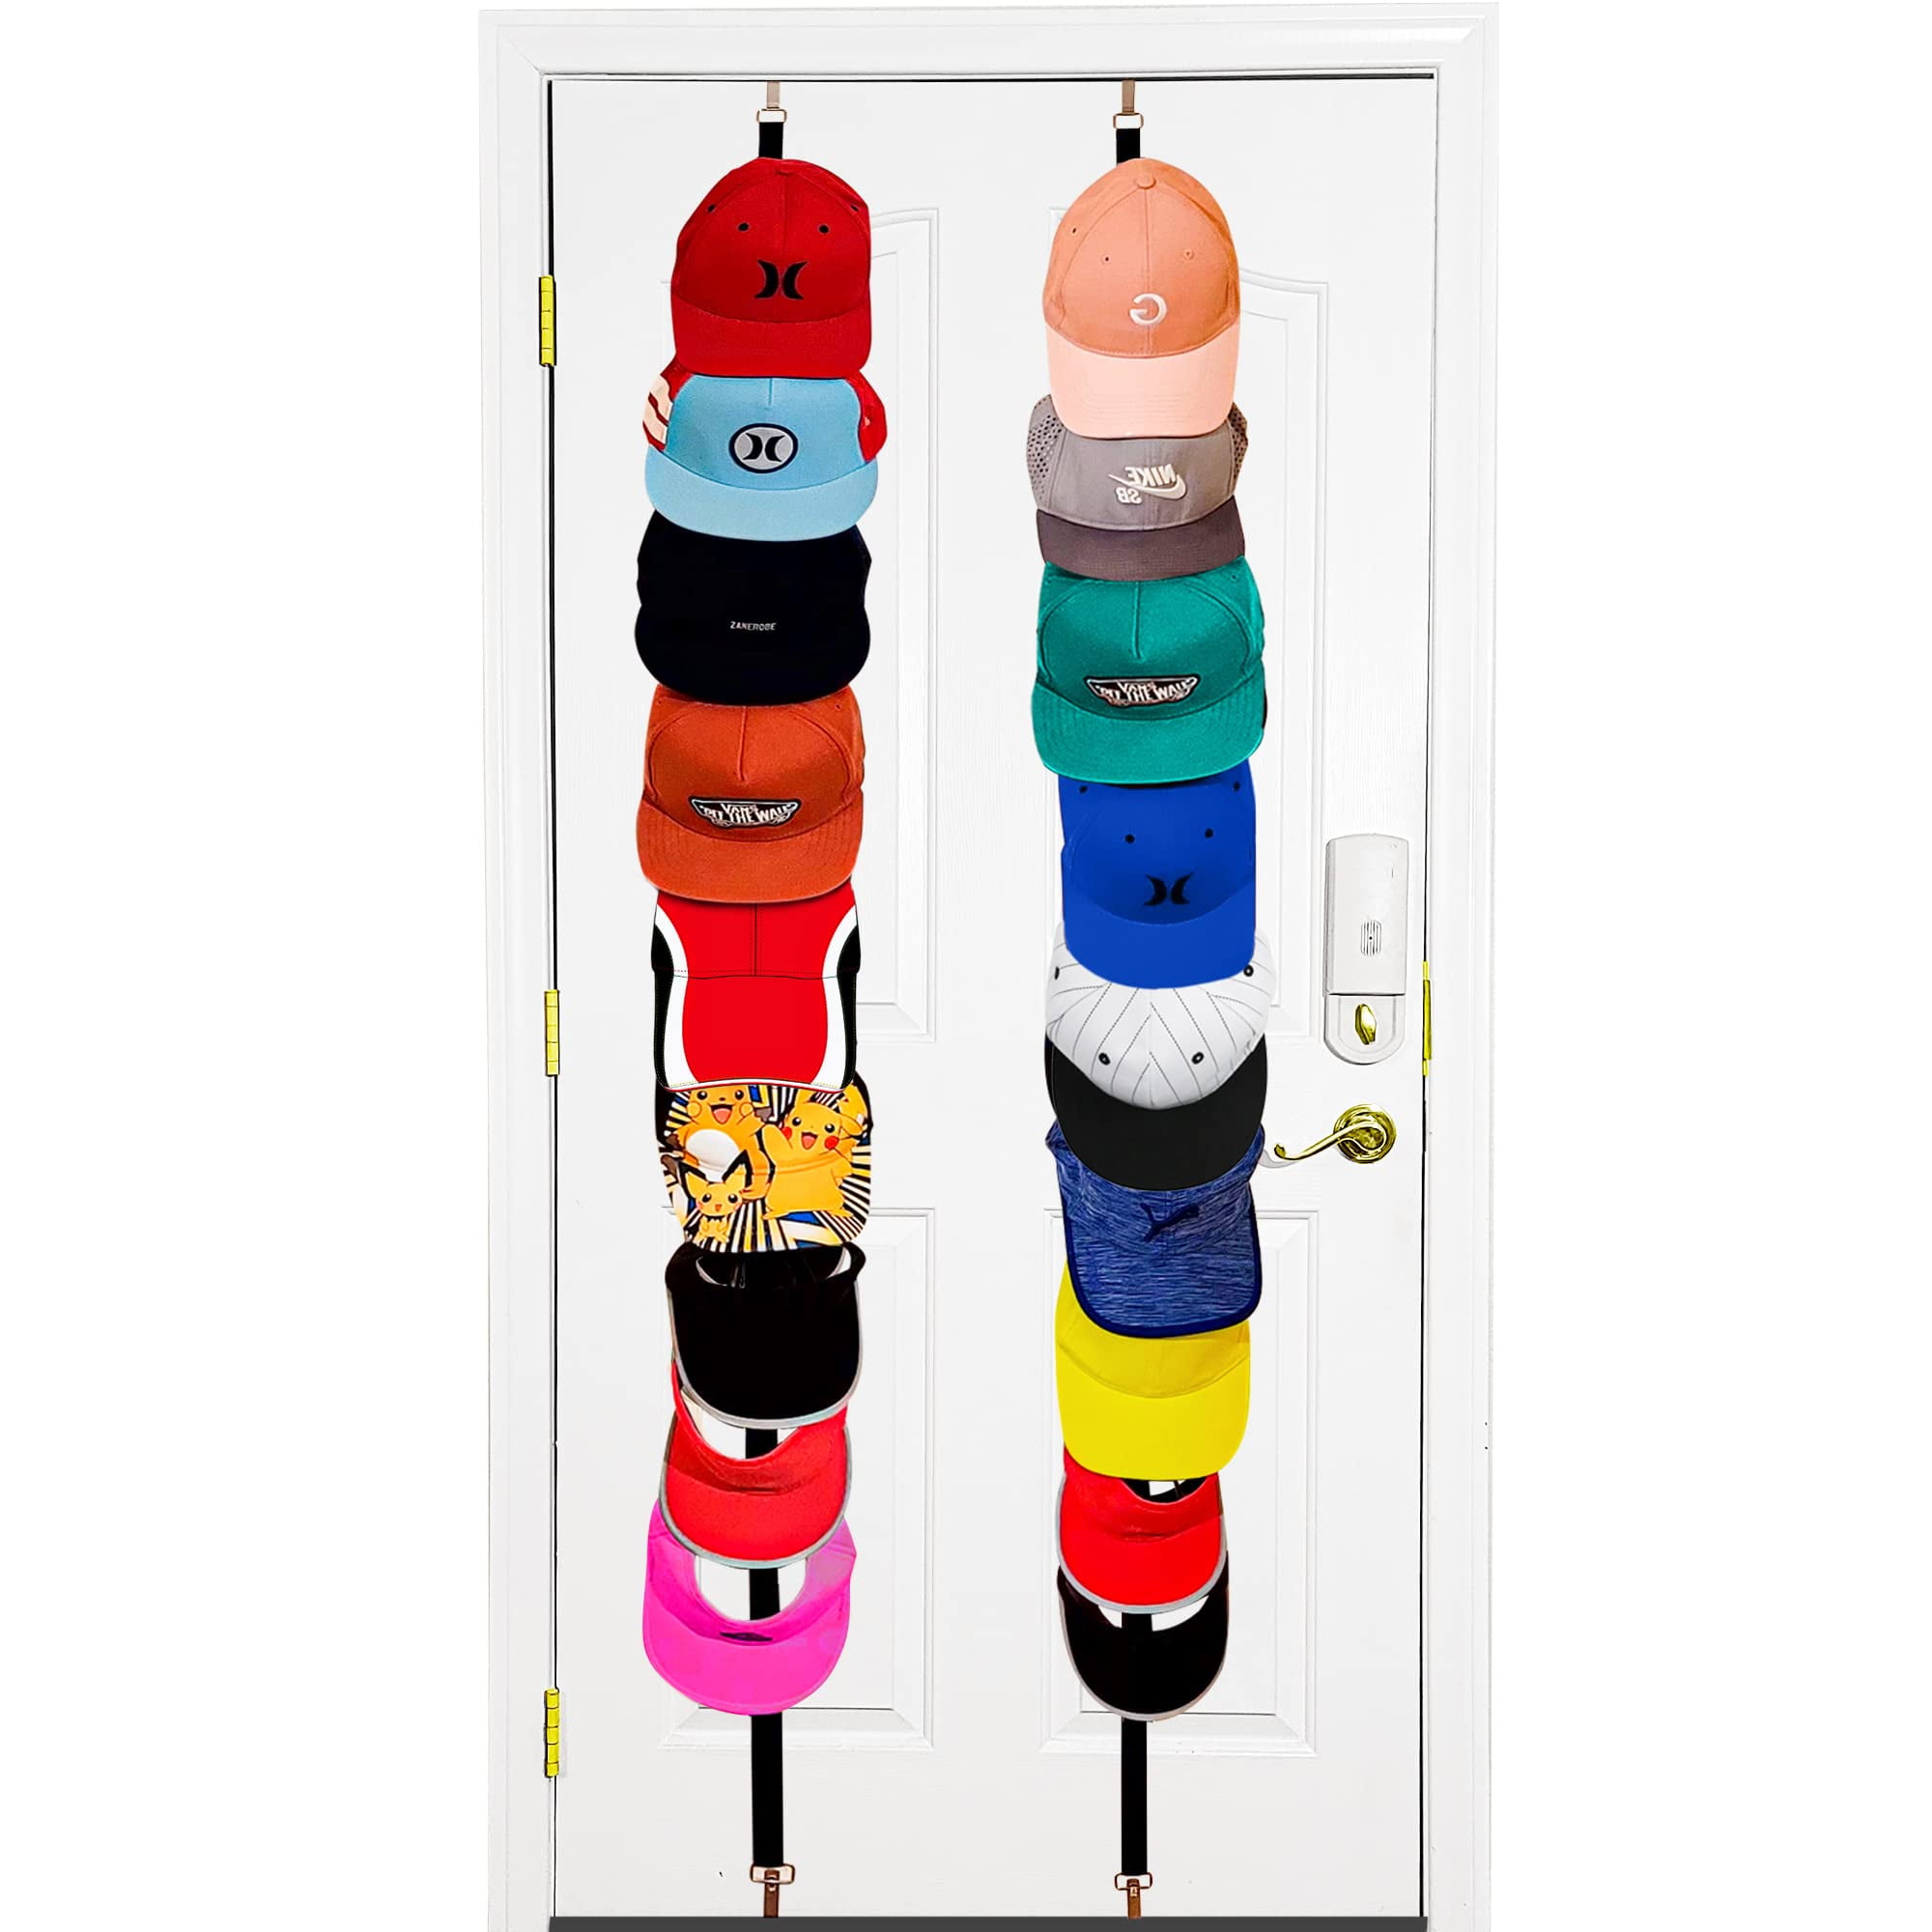 Dix Ultimate Hat Hanger - Hat Accessories